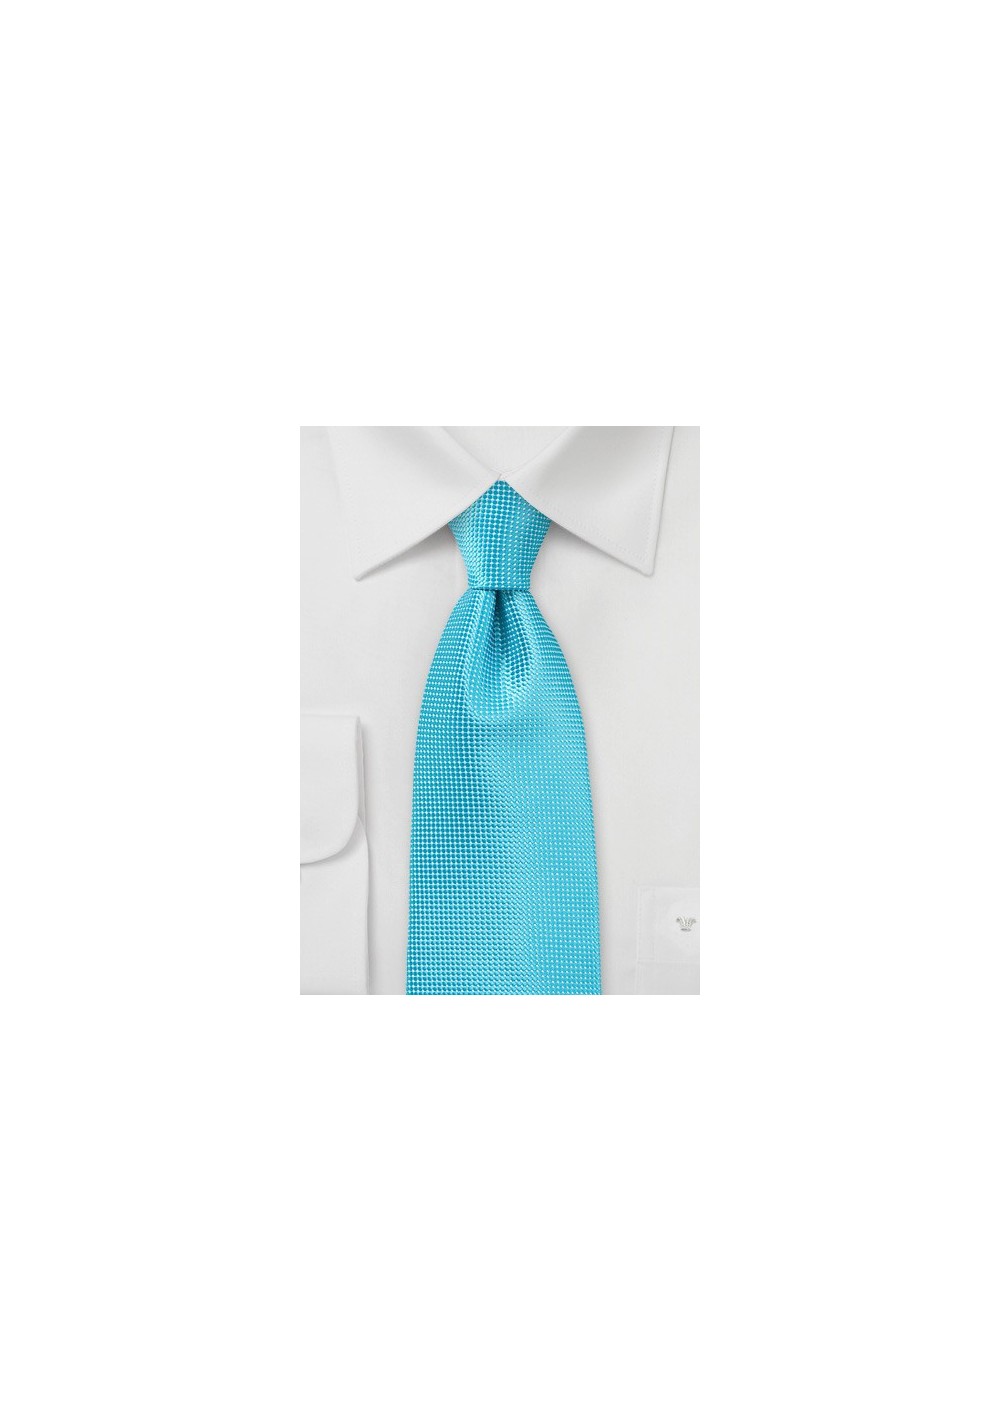 Bluebird Turquoise Necktie in XL Length